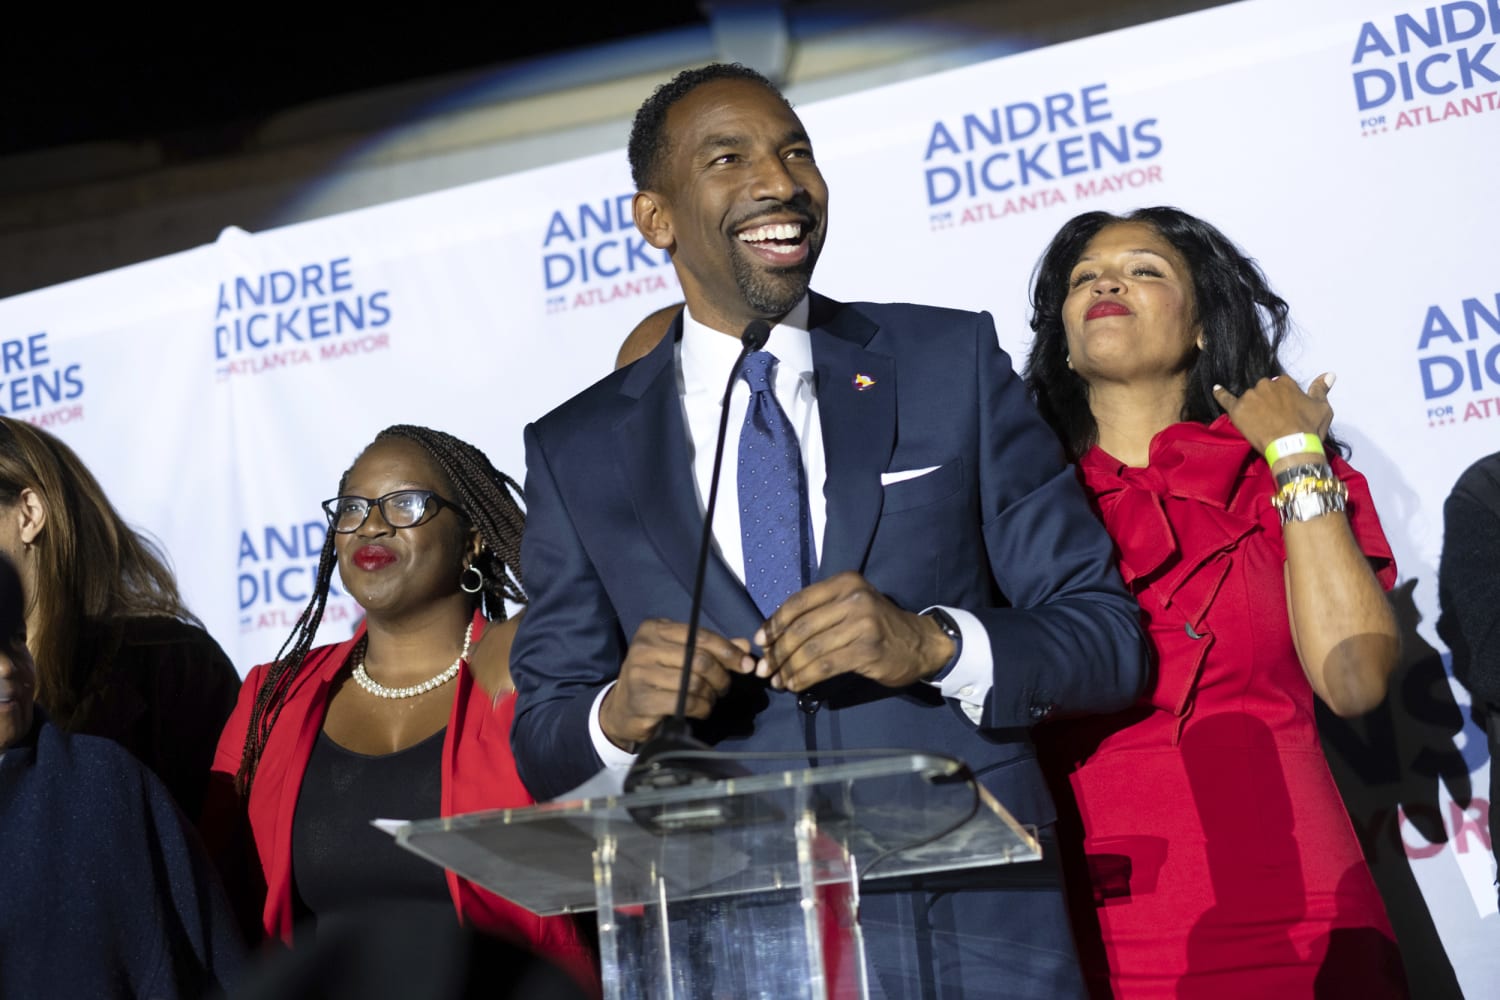 Andre Dickens is the New Mayor of Atlanta